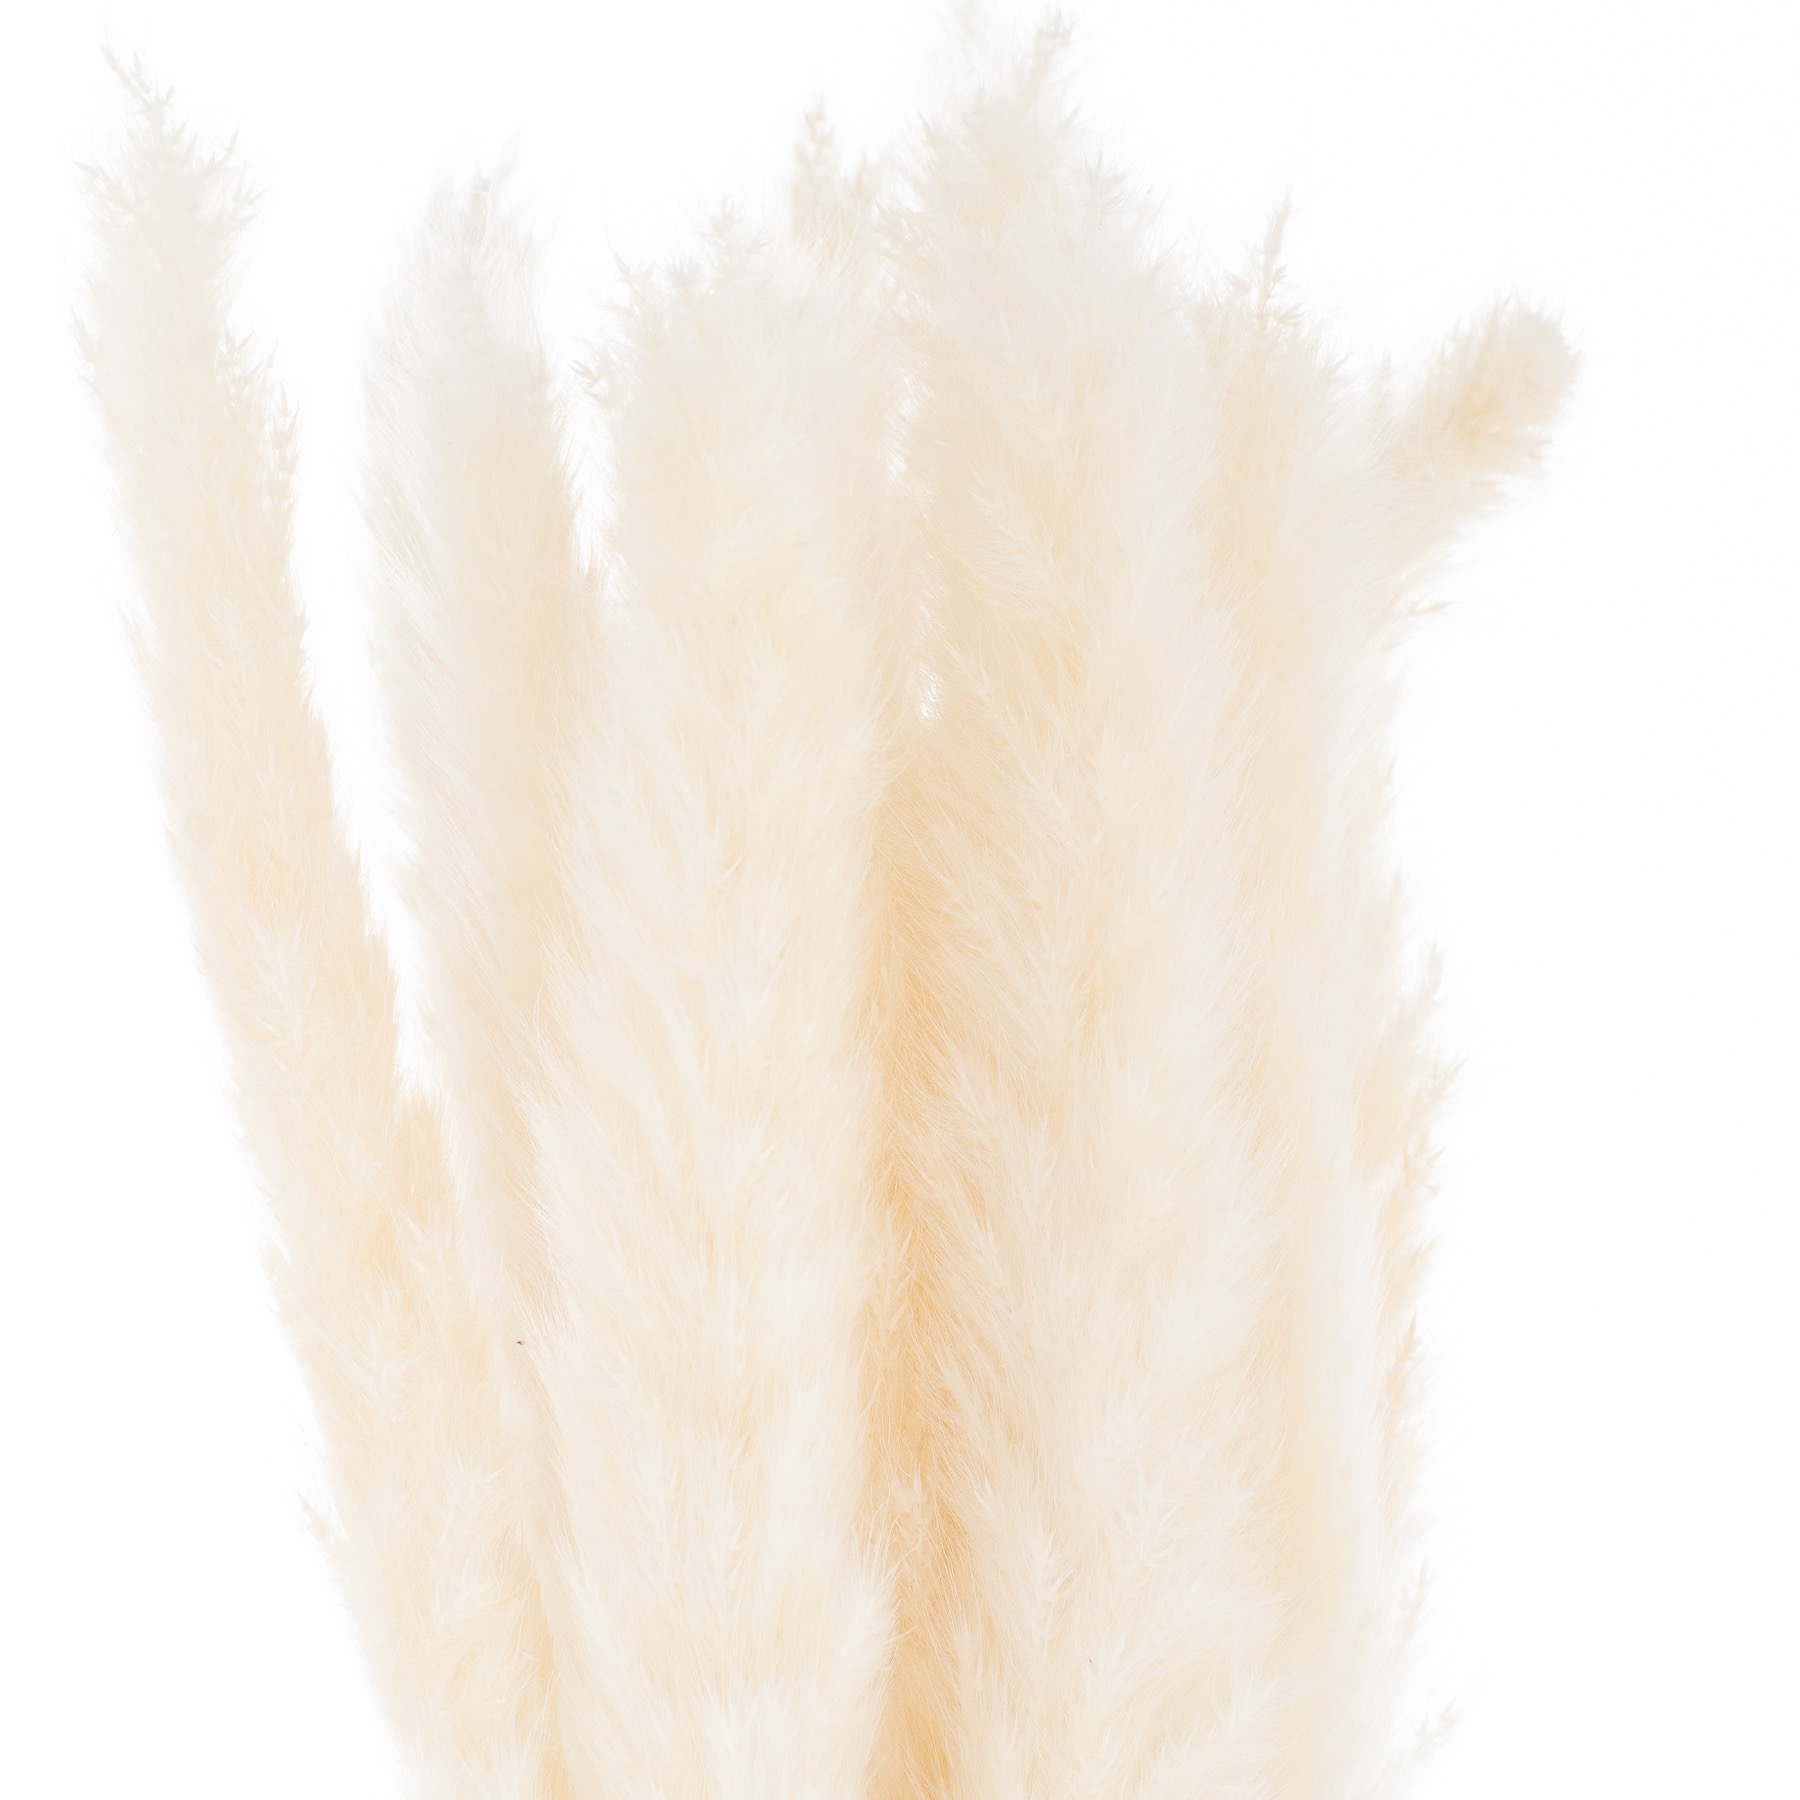 Mini White Pampas Grass Bunch Of 15 - Image 1